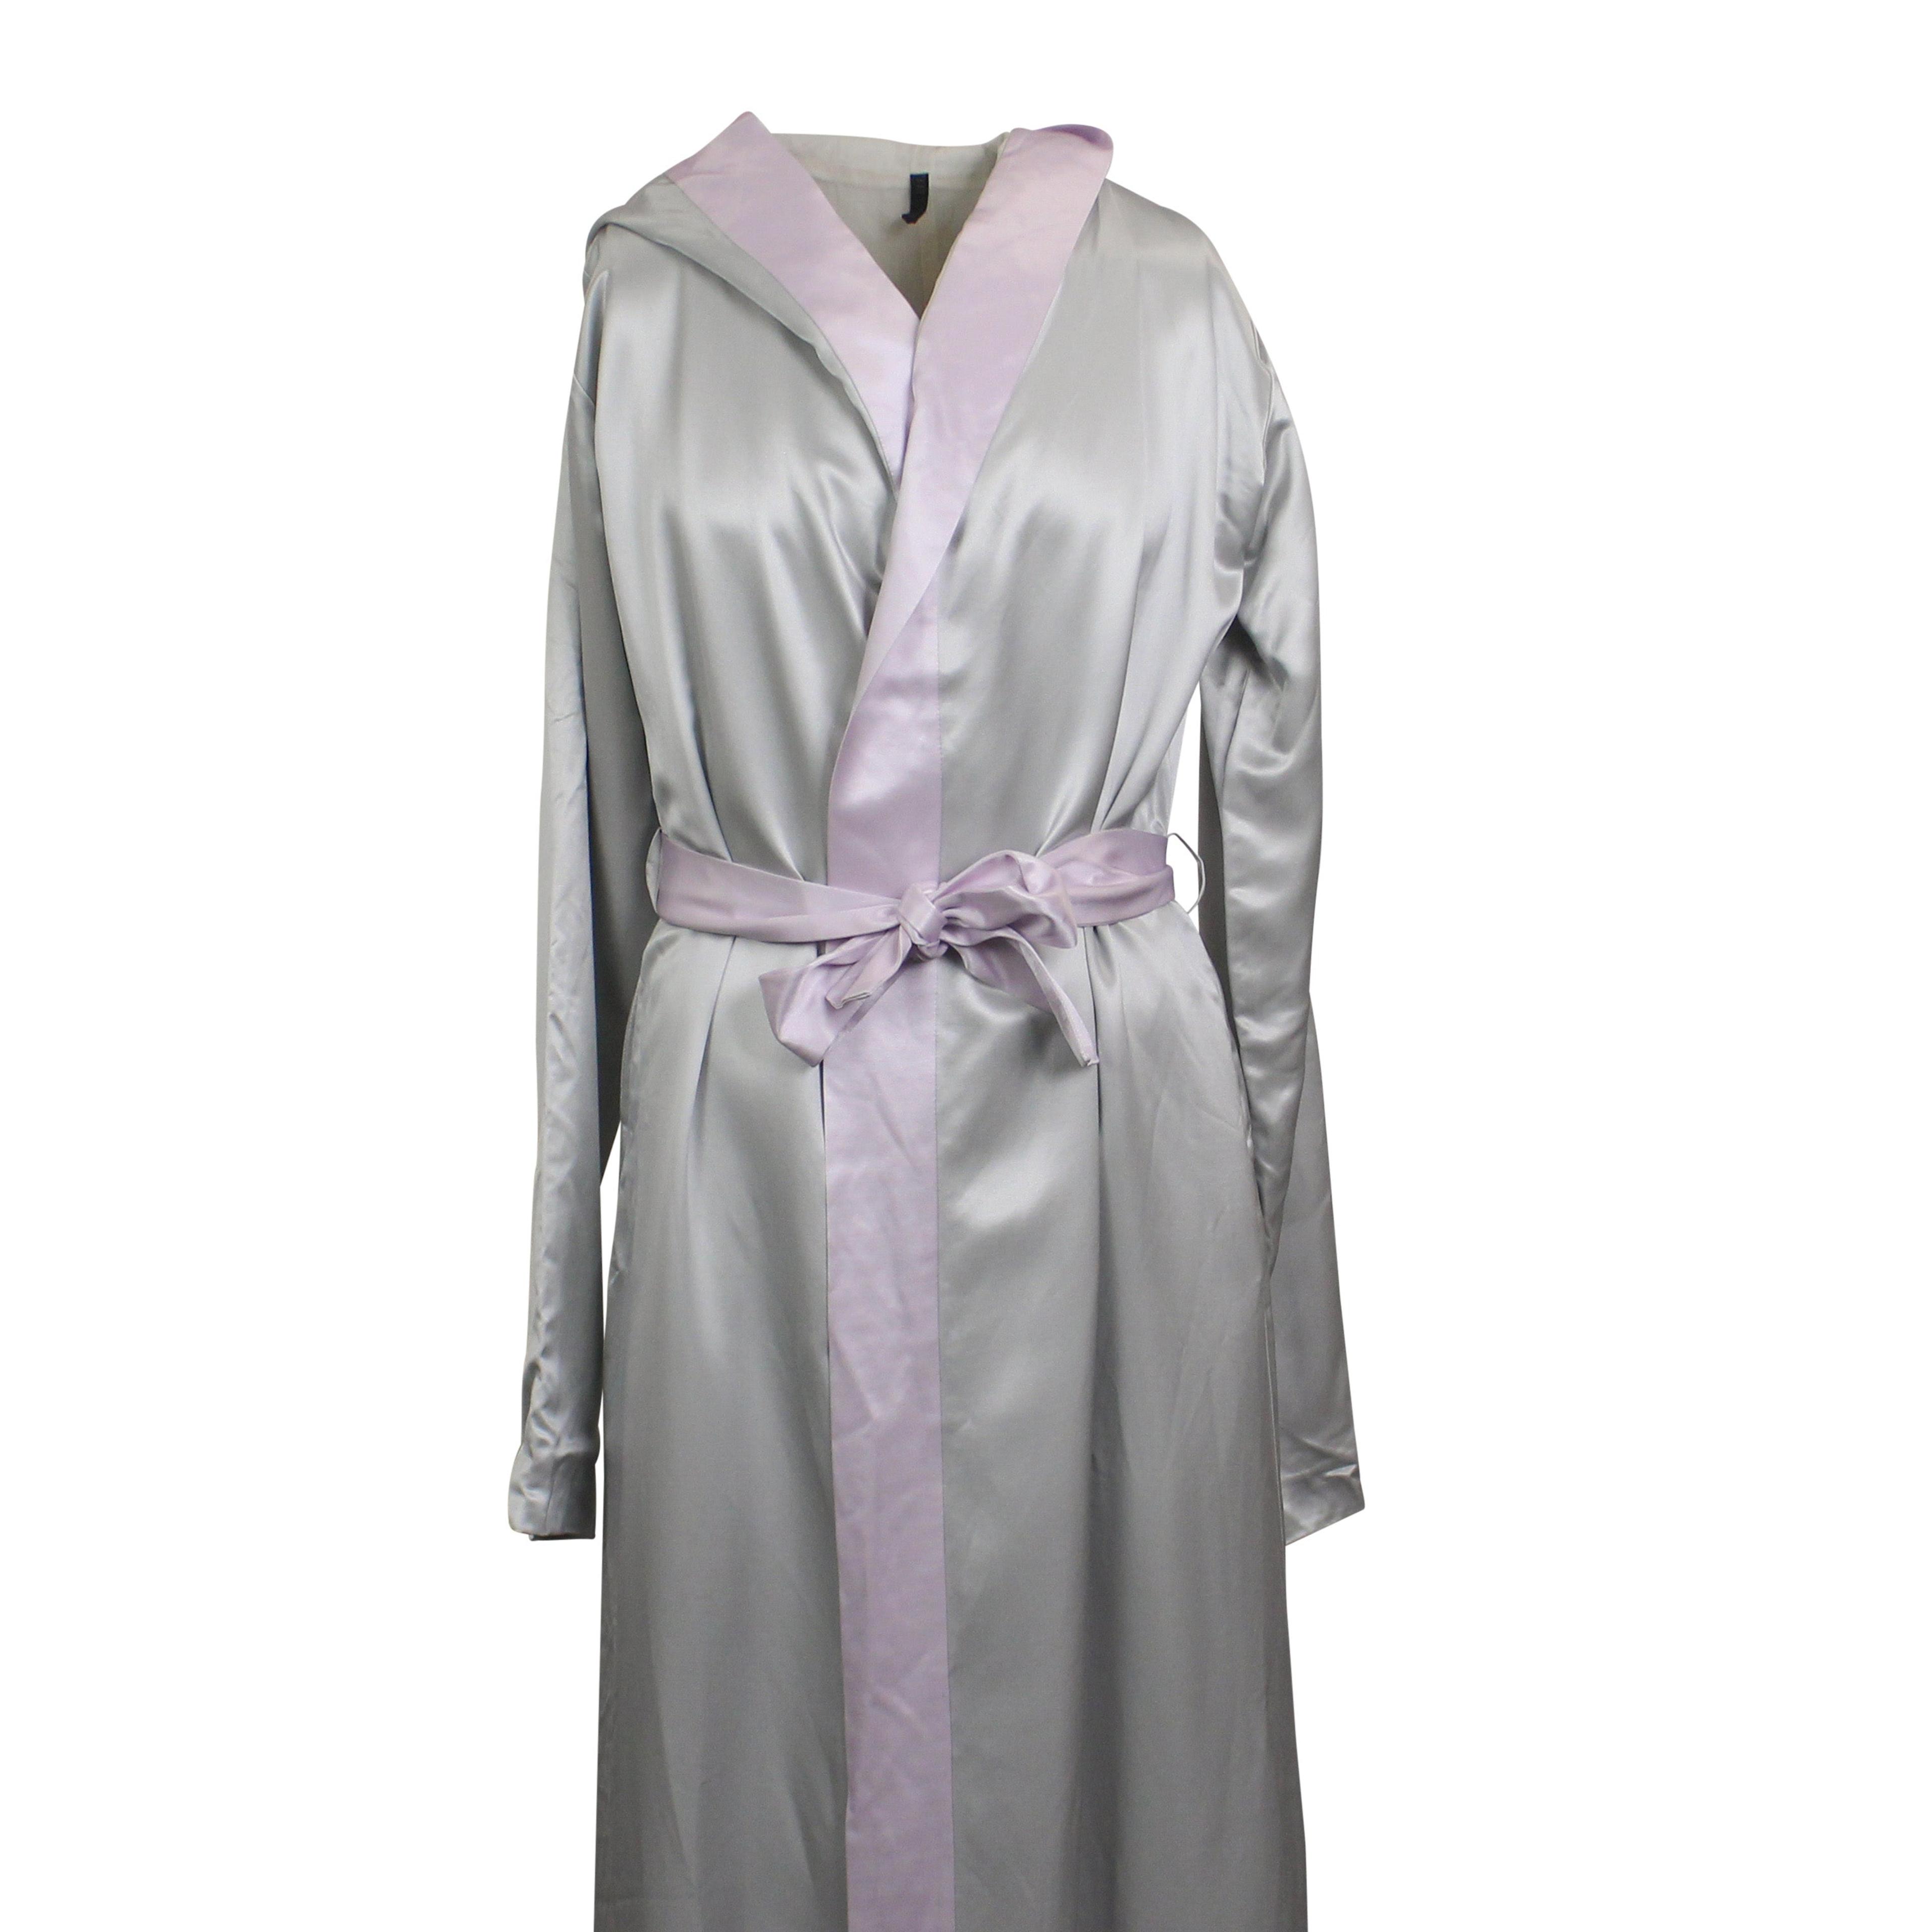 Alternate View 1 of Light Gray Silk Long Boxing Robe Dress